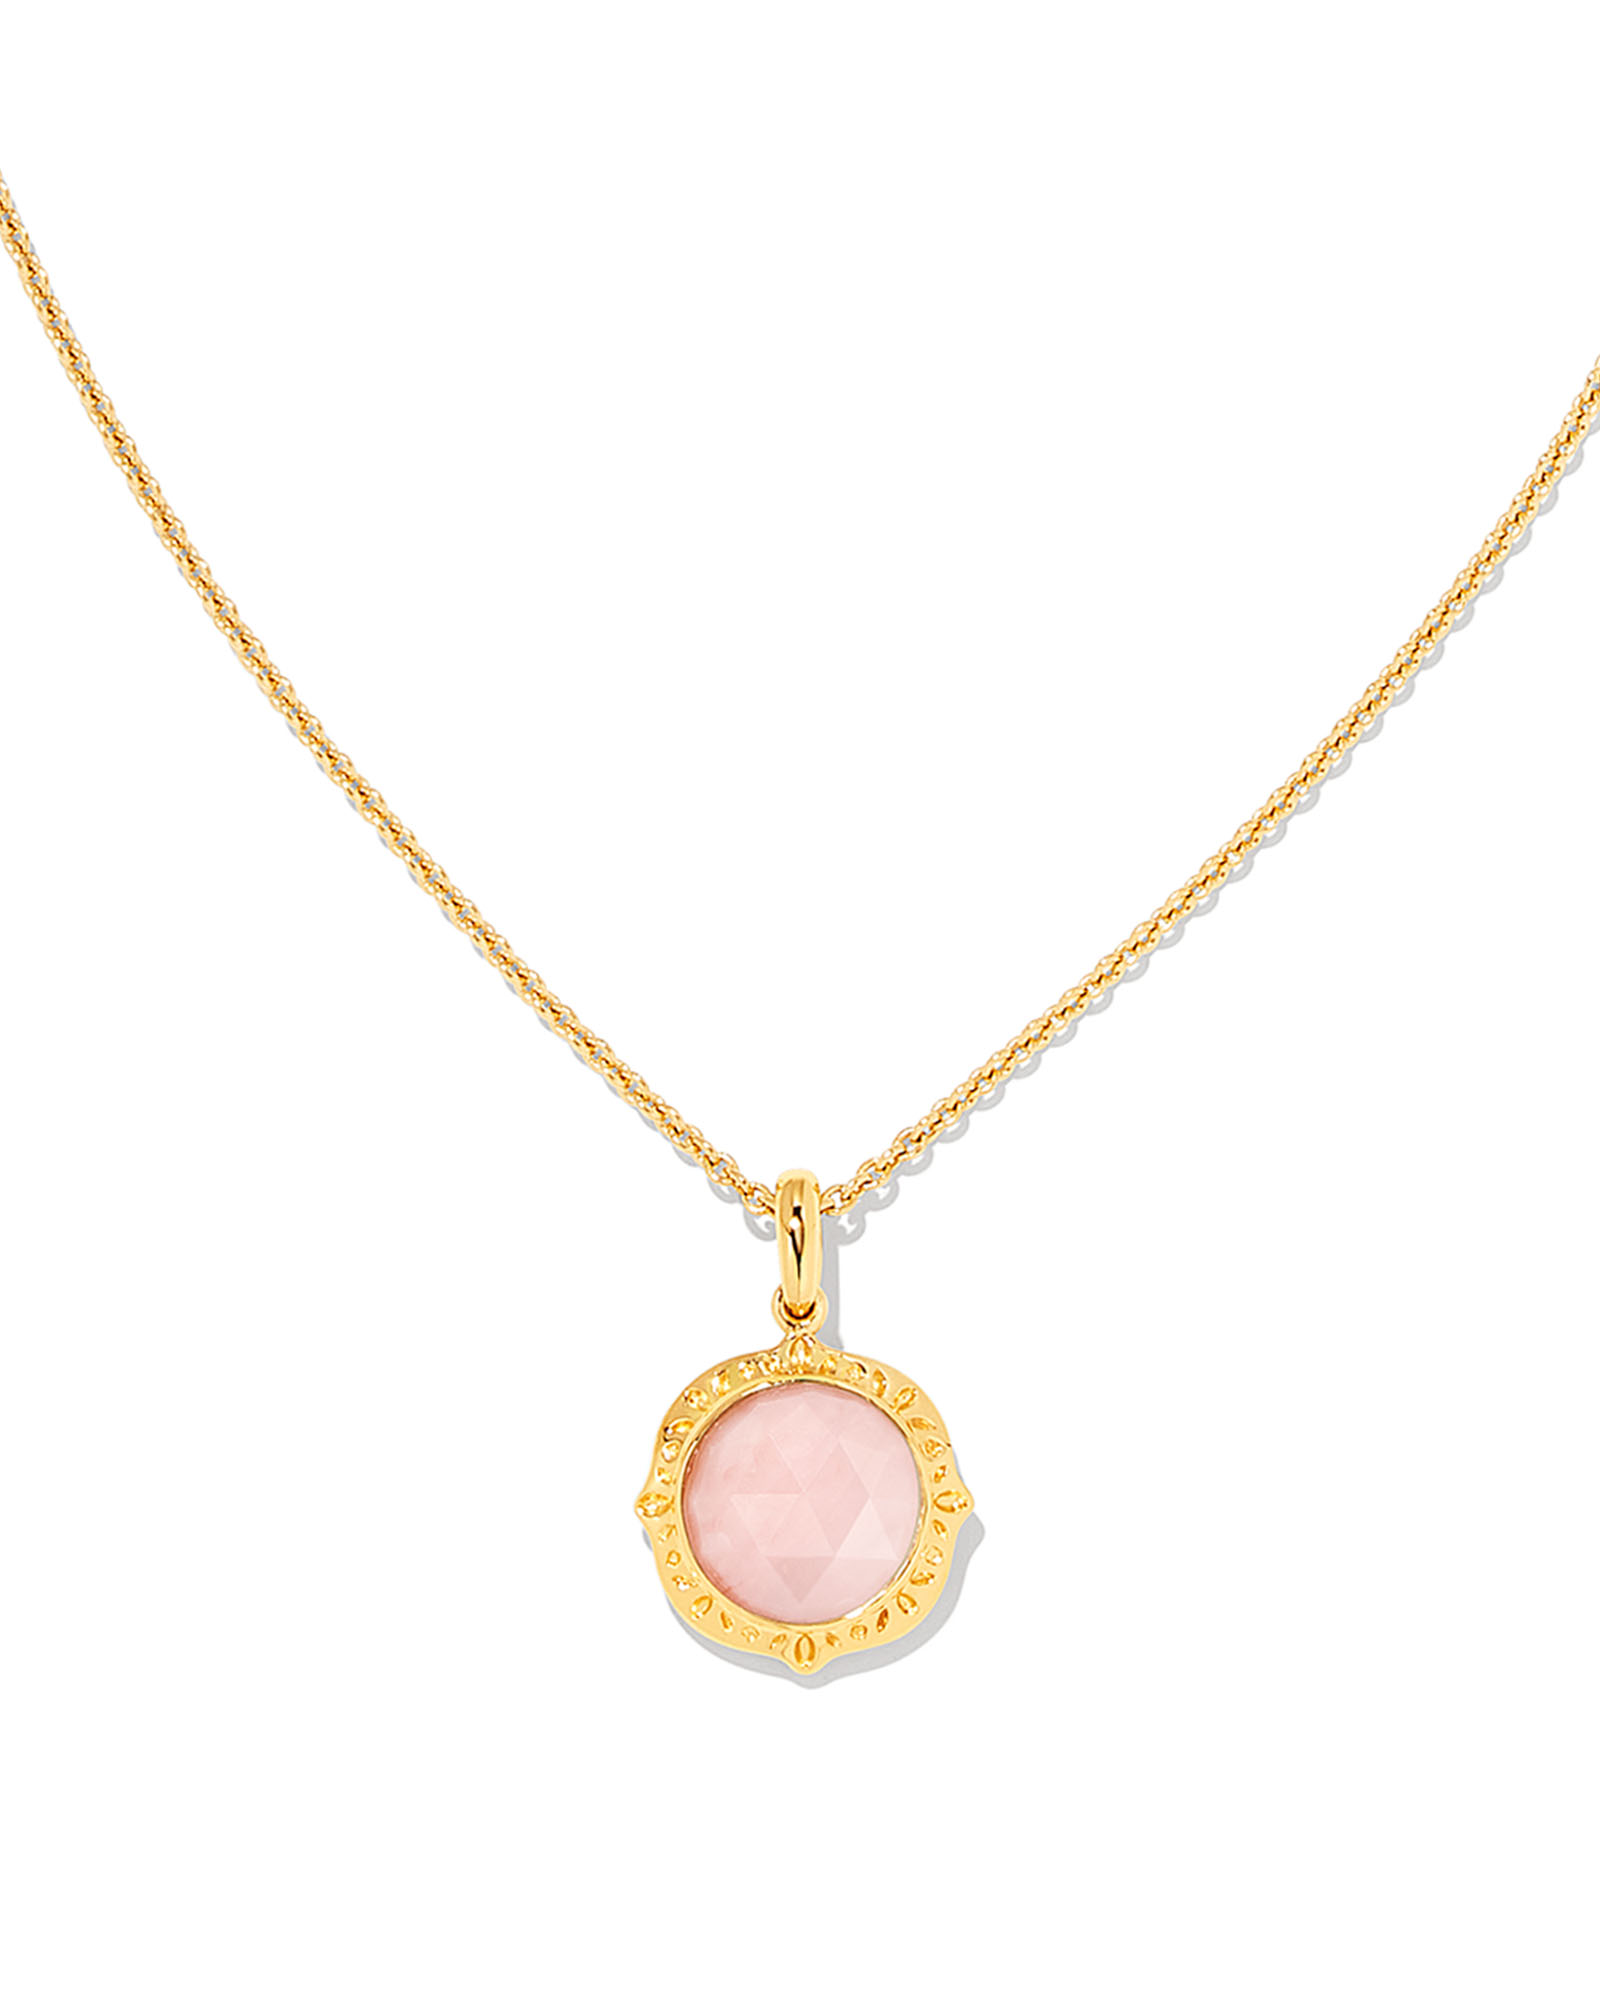 KENDRA SCOTT Elisa Hot Pink Gold Pendant Necklace | Pink pendant necklace,  Pink pendants, Kendra scott drusy necklace